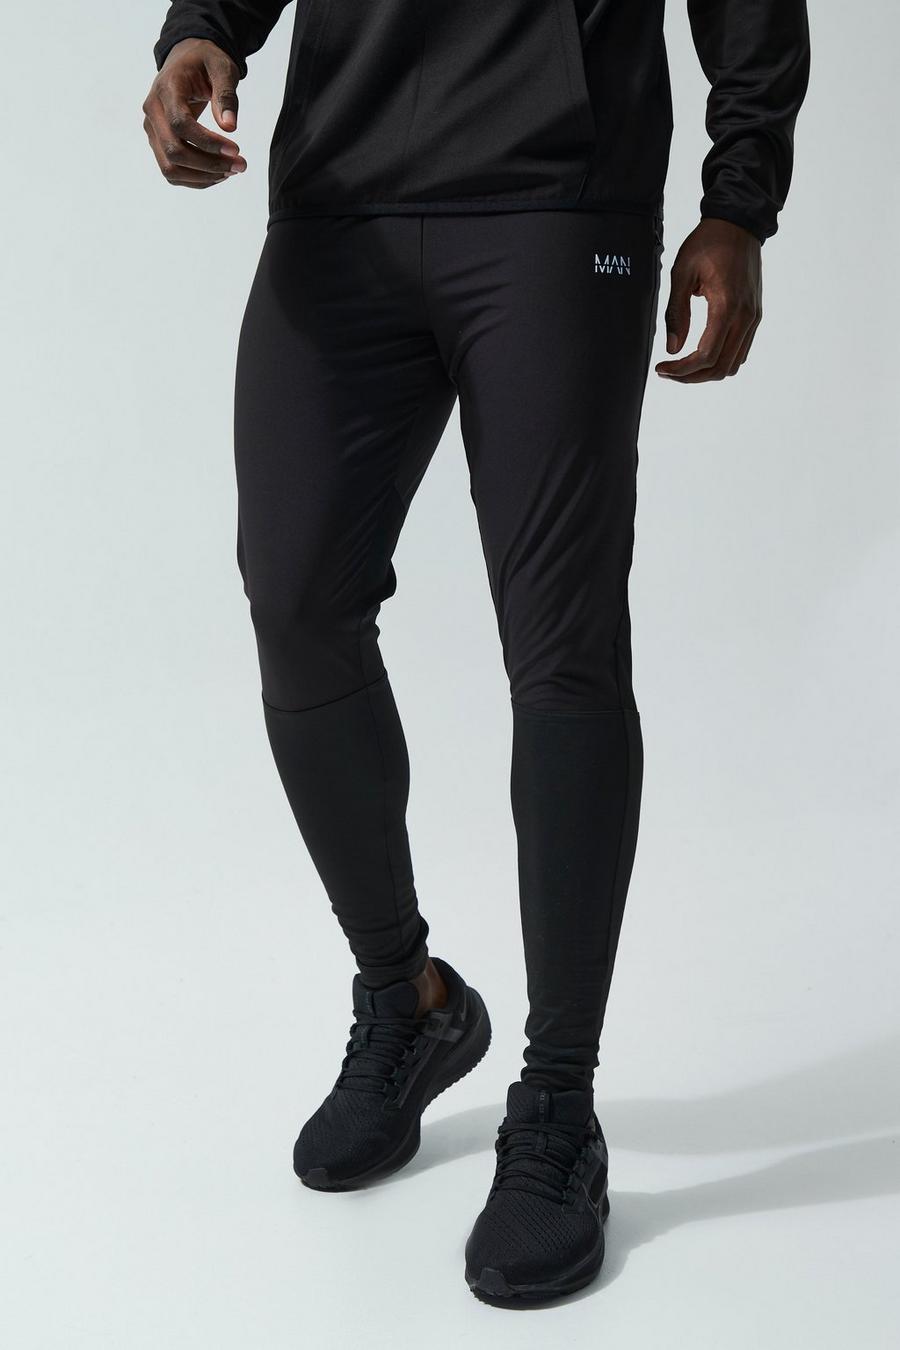 Pantalones deportivos MAN Active resistentes, Black negro